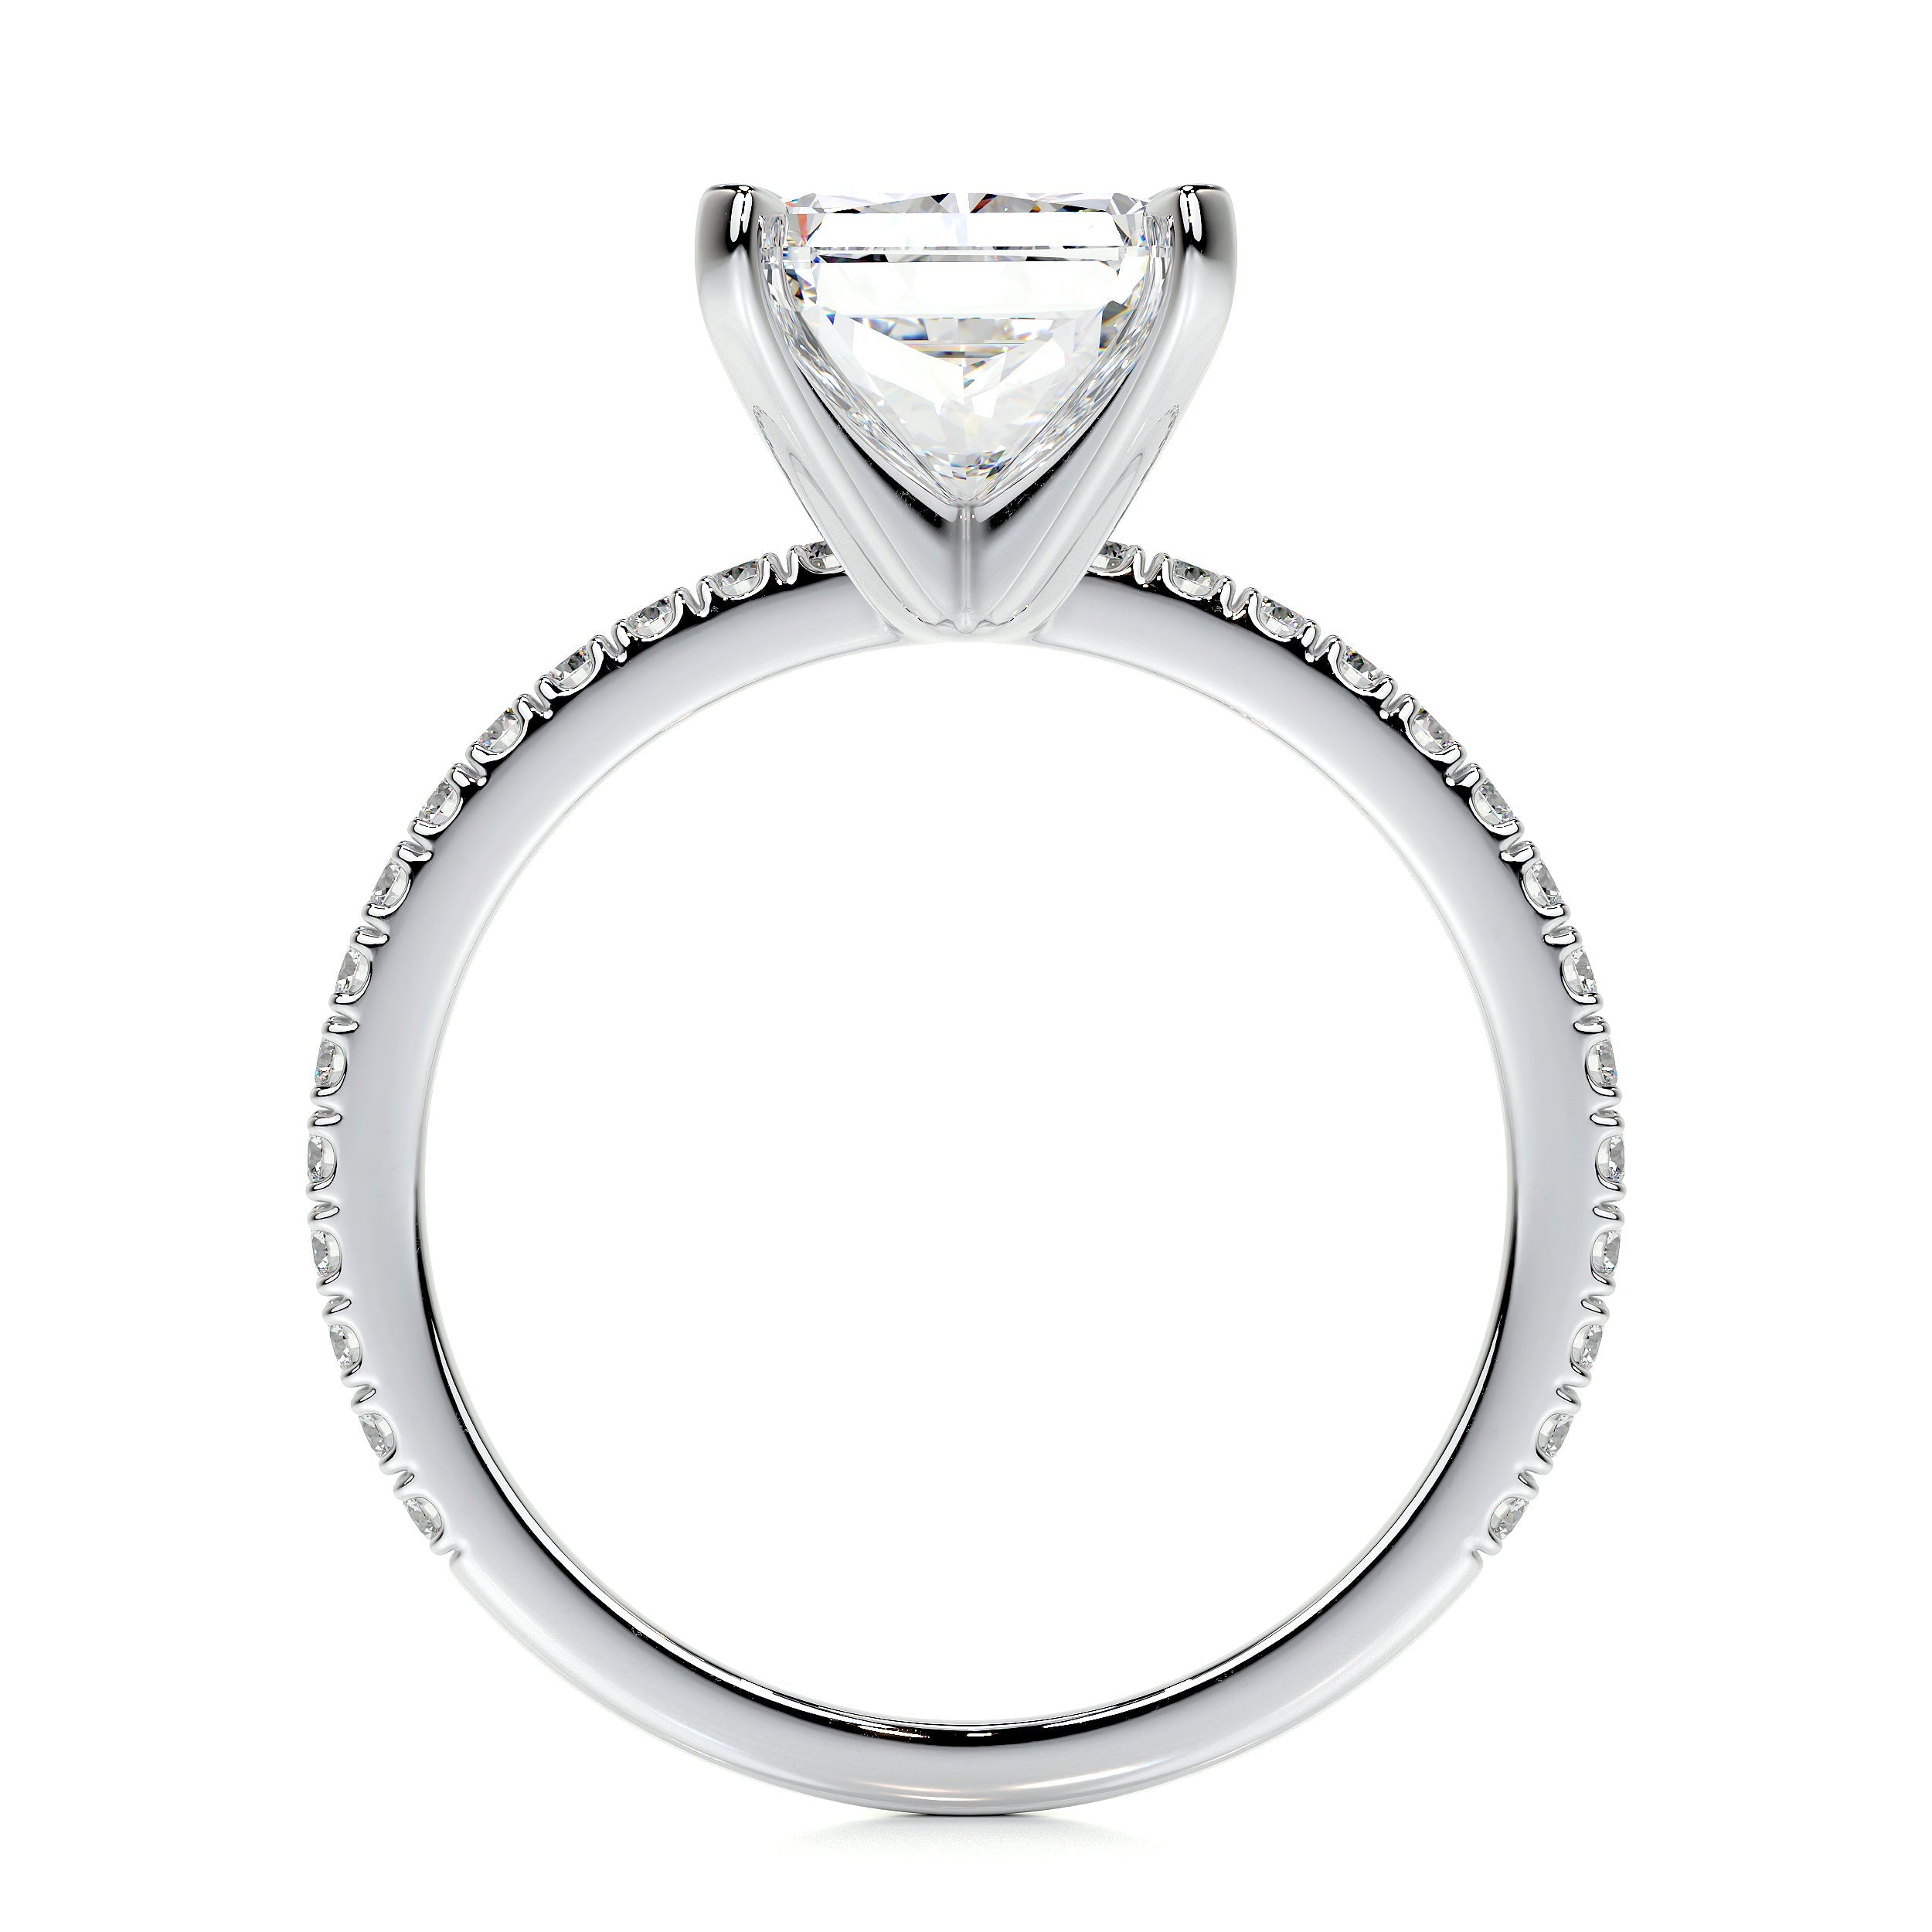 Audrey Lab Grown Diamond Ring   (3.5 Carat) -Platinum